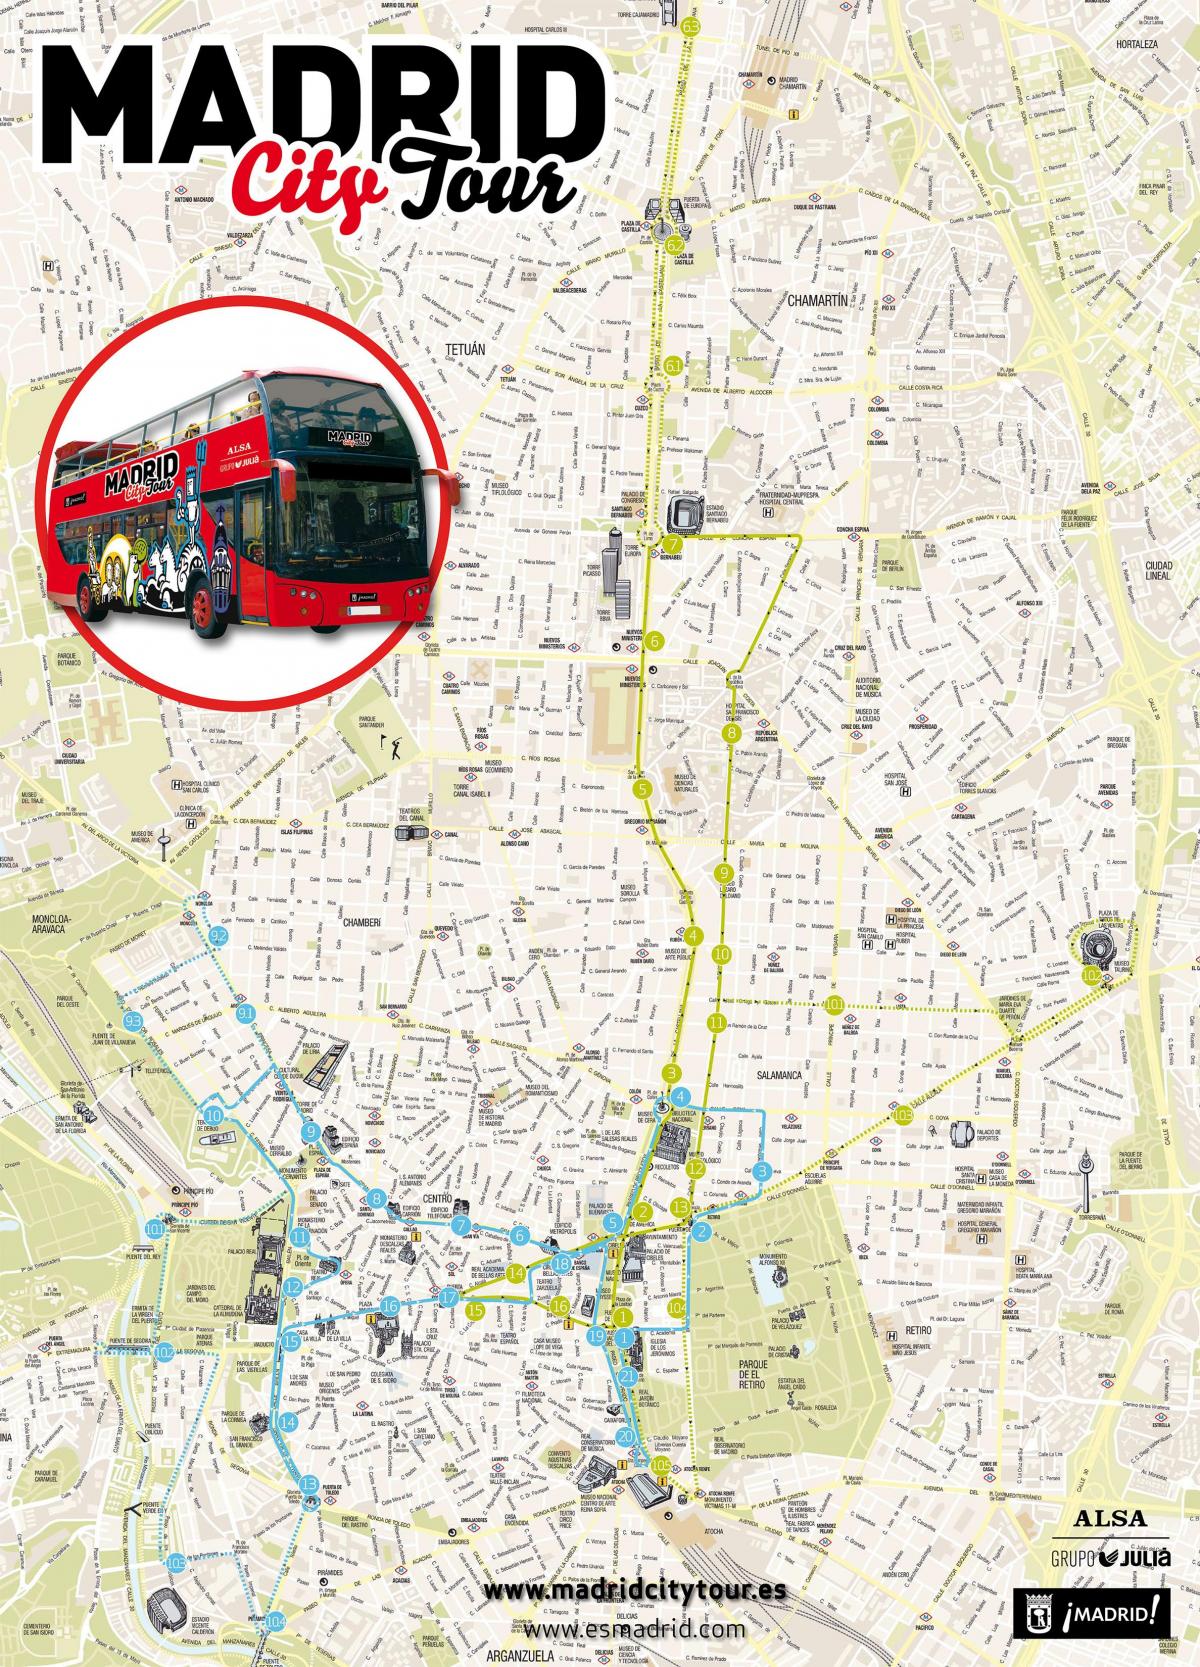 Madrid bus touristique carte